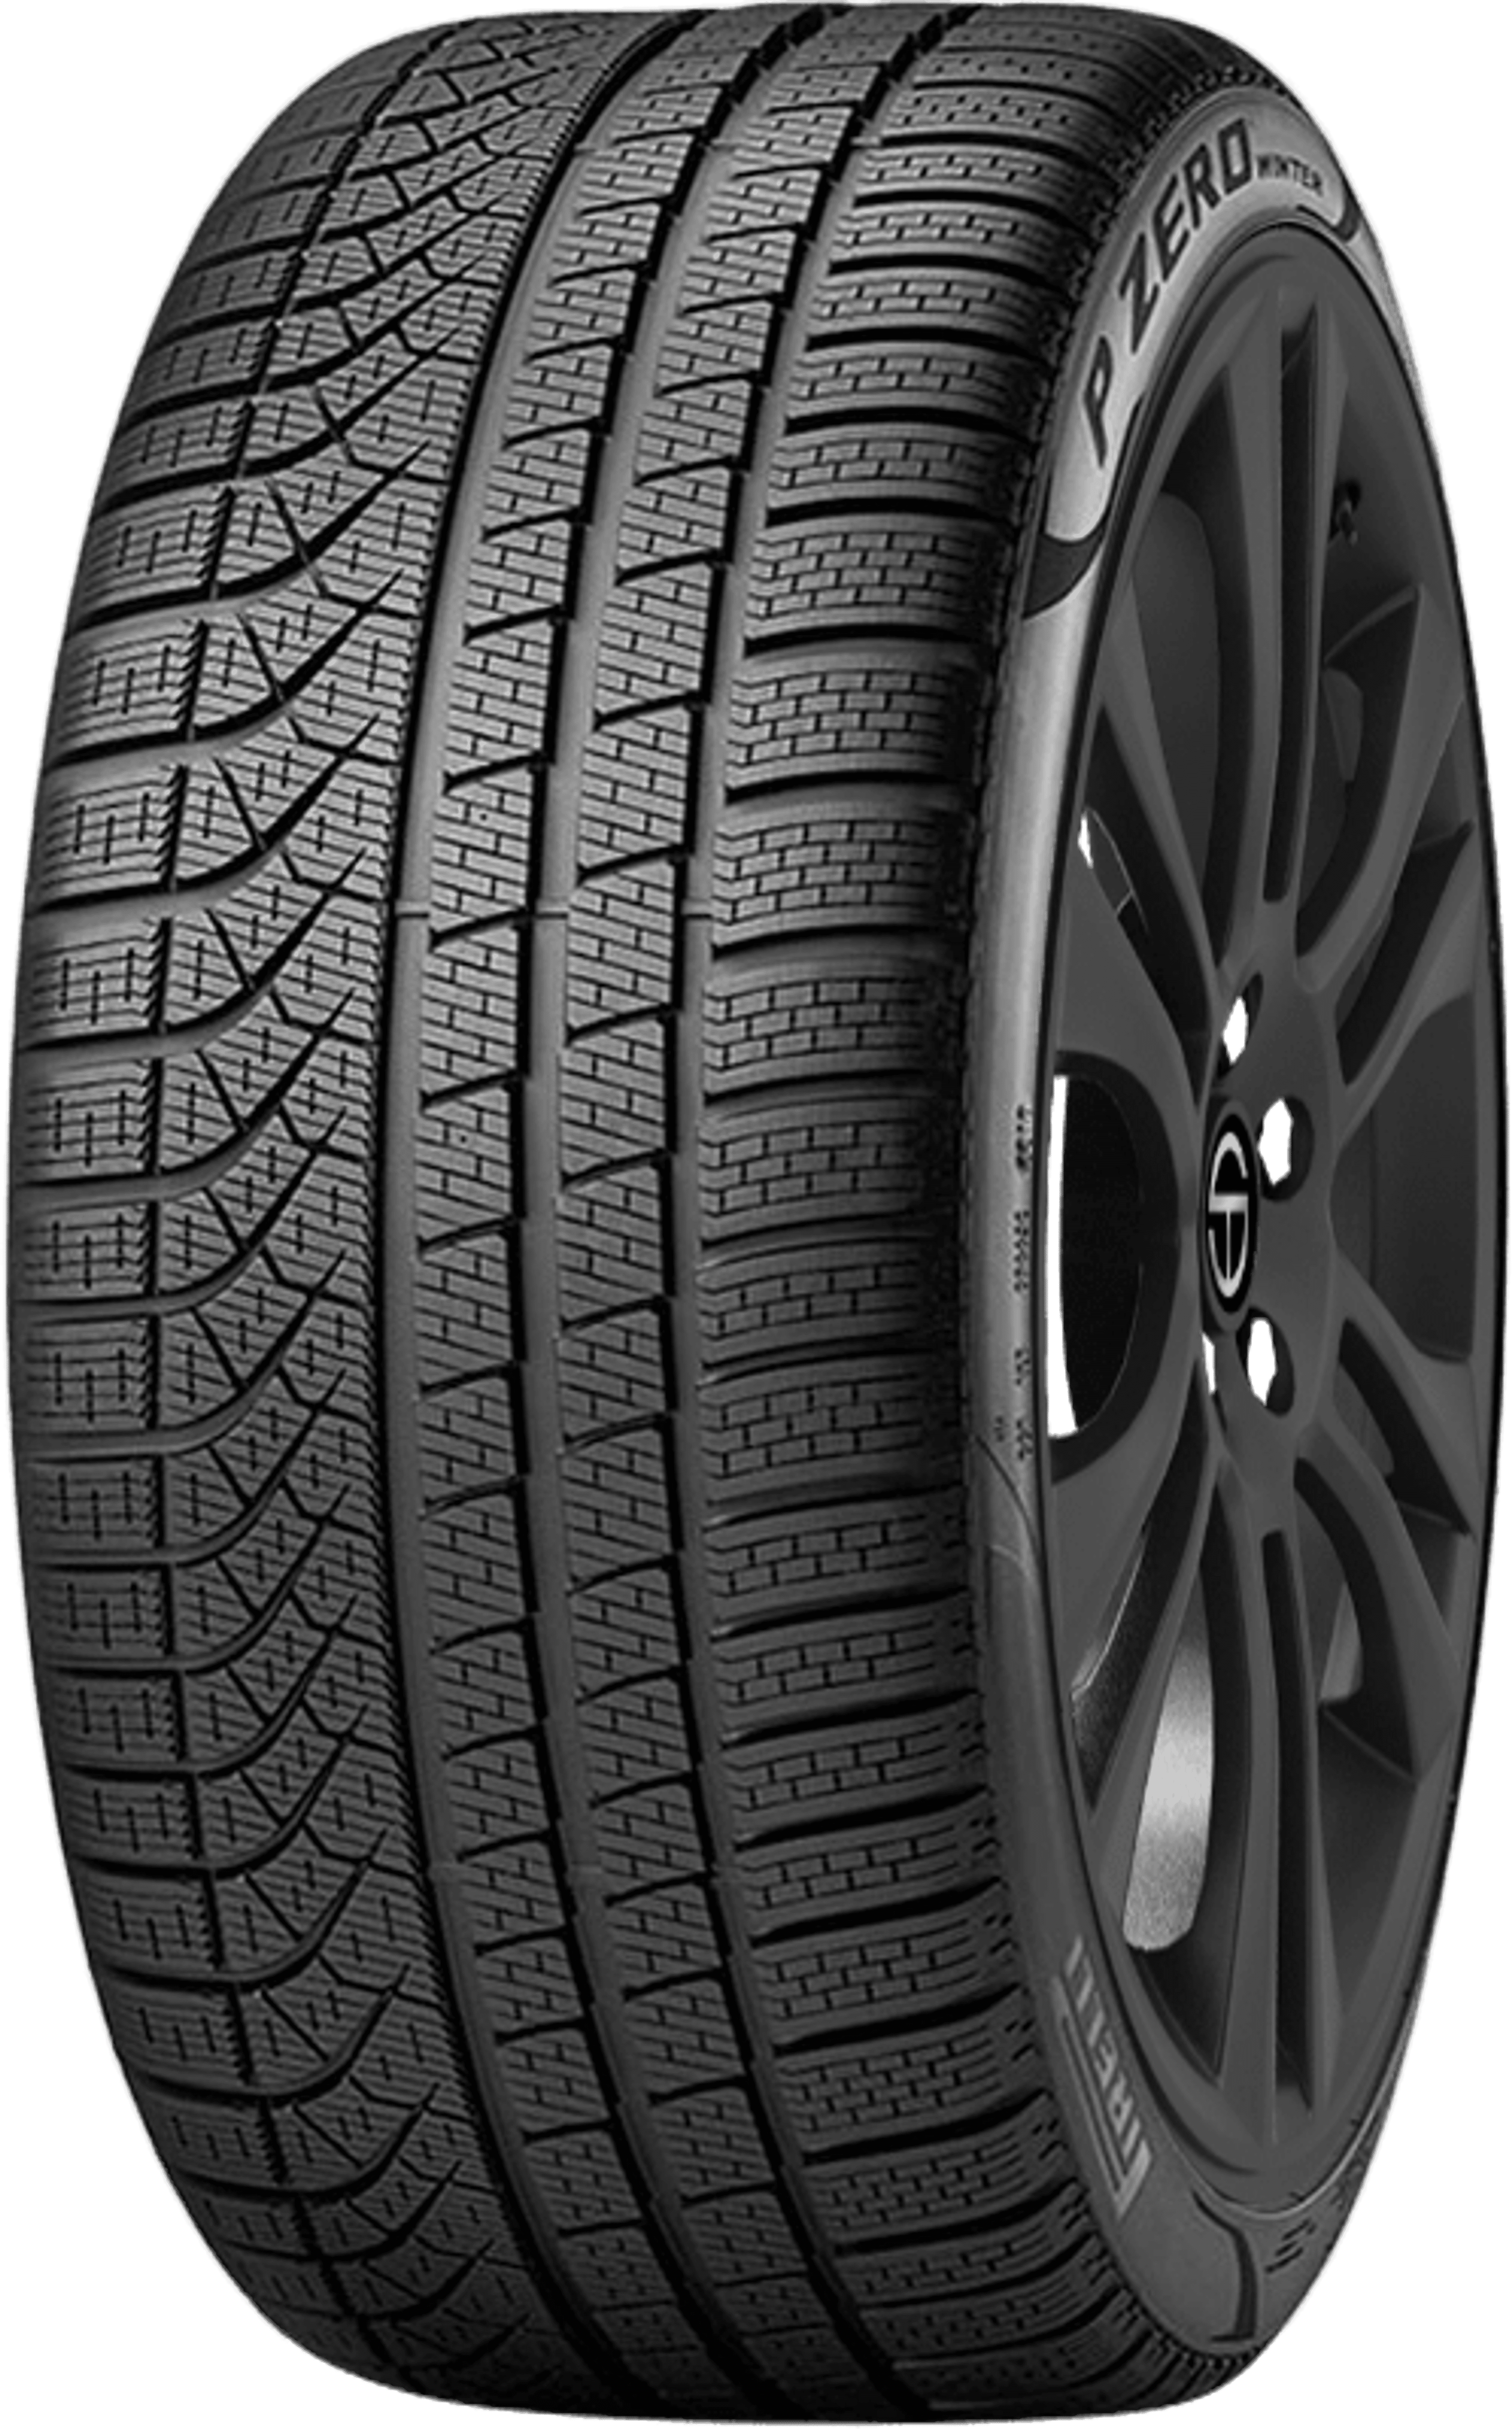 Buy Pirelli P Zero Winter Tires Online | SimpleTire